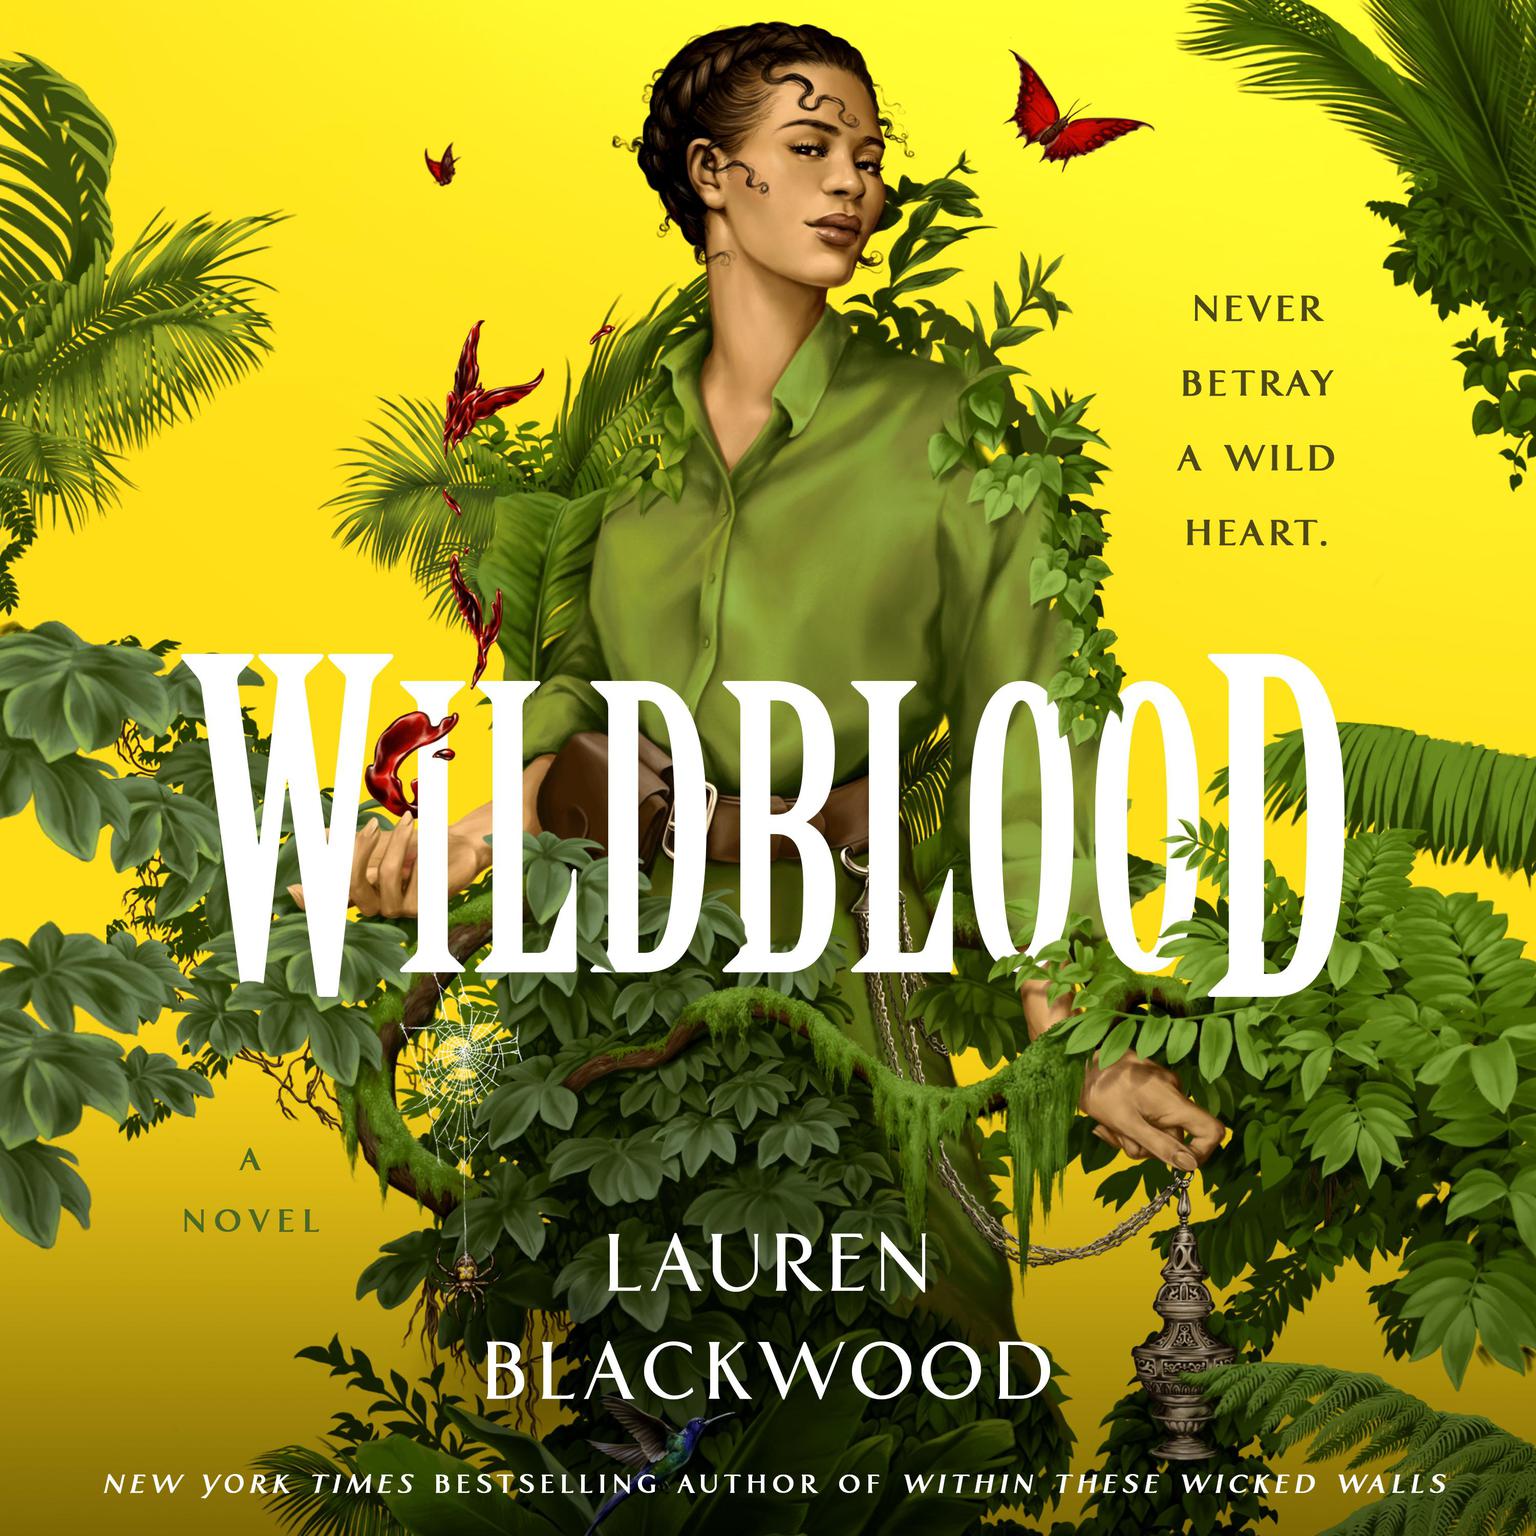 Wildblood: A Novel Audiobook, by Lauren Blackwood